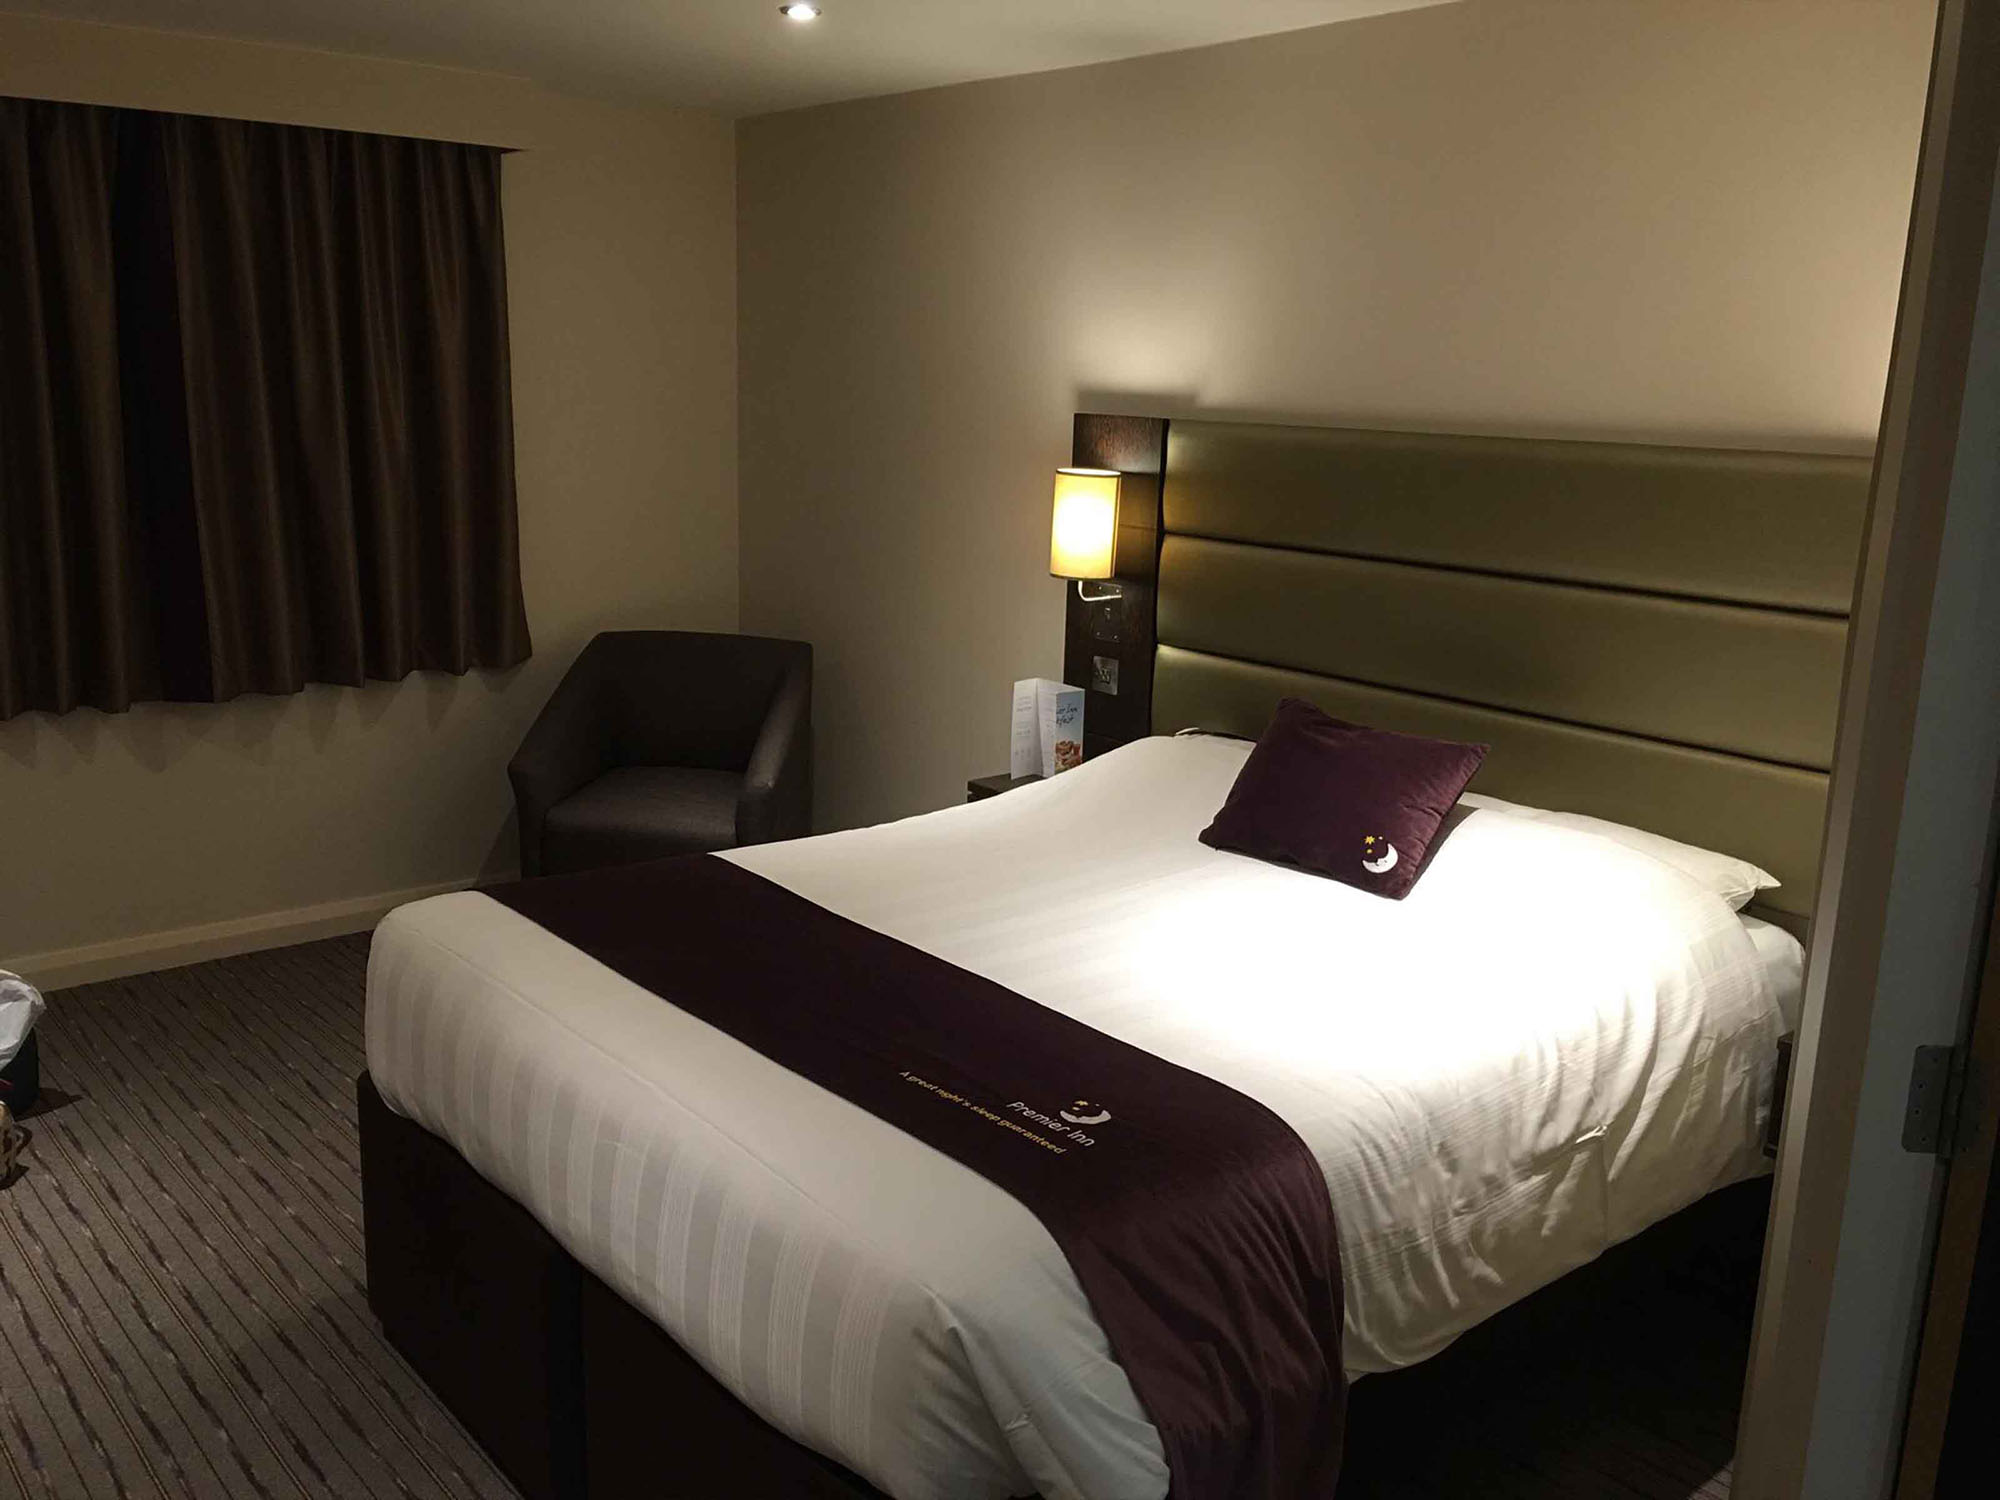 Best Hotels in Leeds - Premier Inn